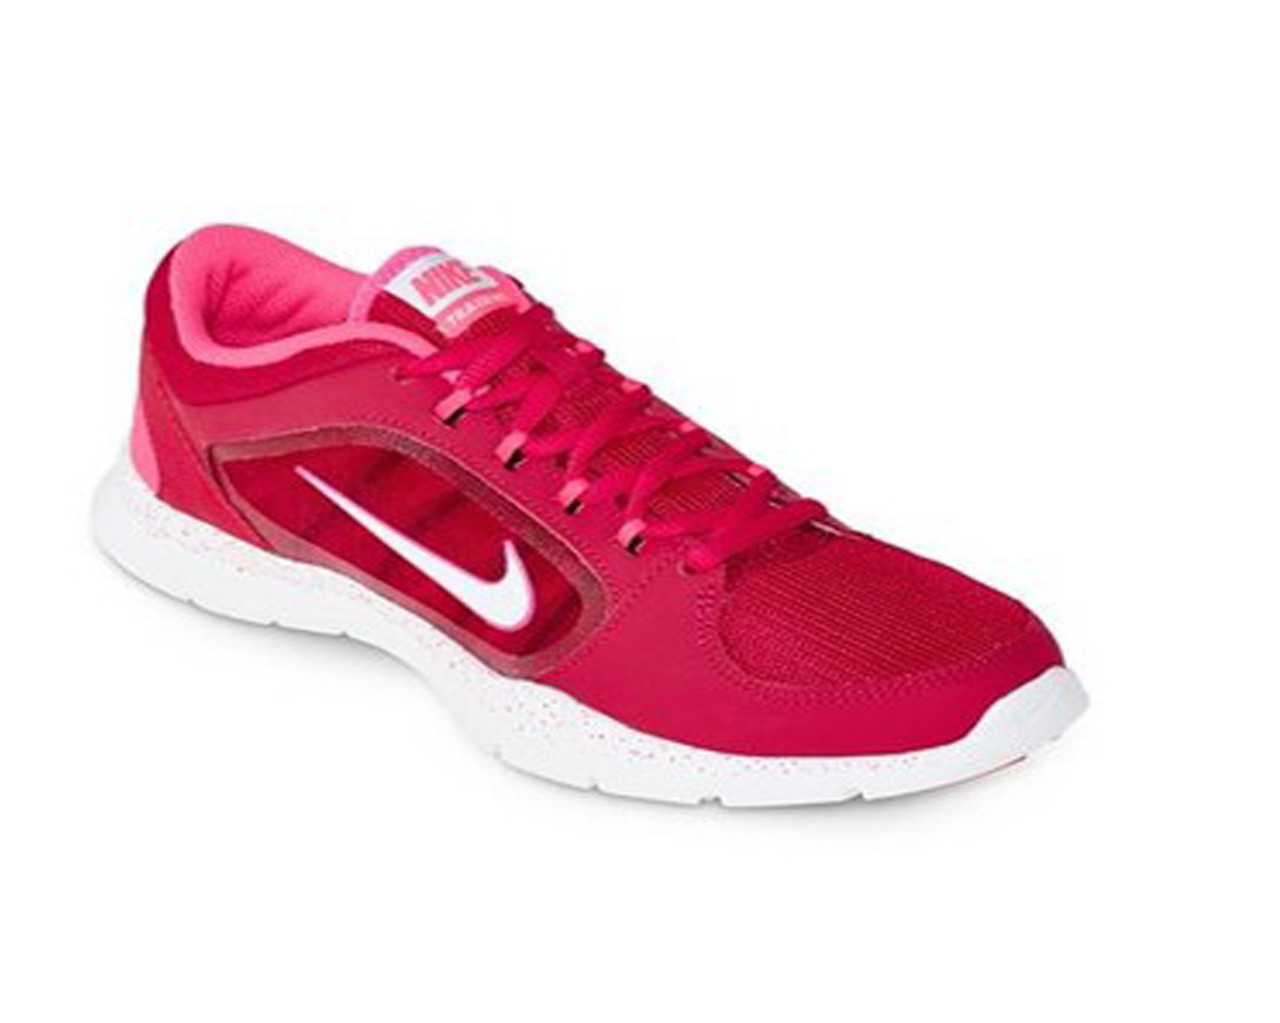 Nike Women's Flex Trainer 4 Cross Trainer - Pink | Discount Nike Ladies  Athletic & More - Shoolu.com | Shoolu.com